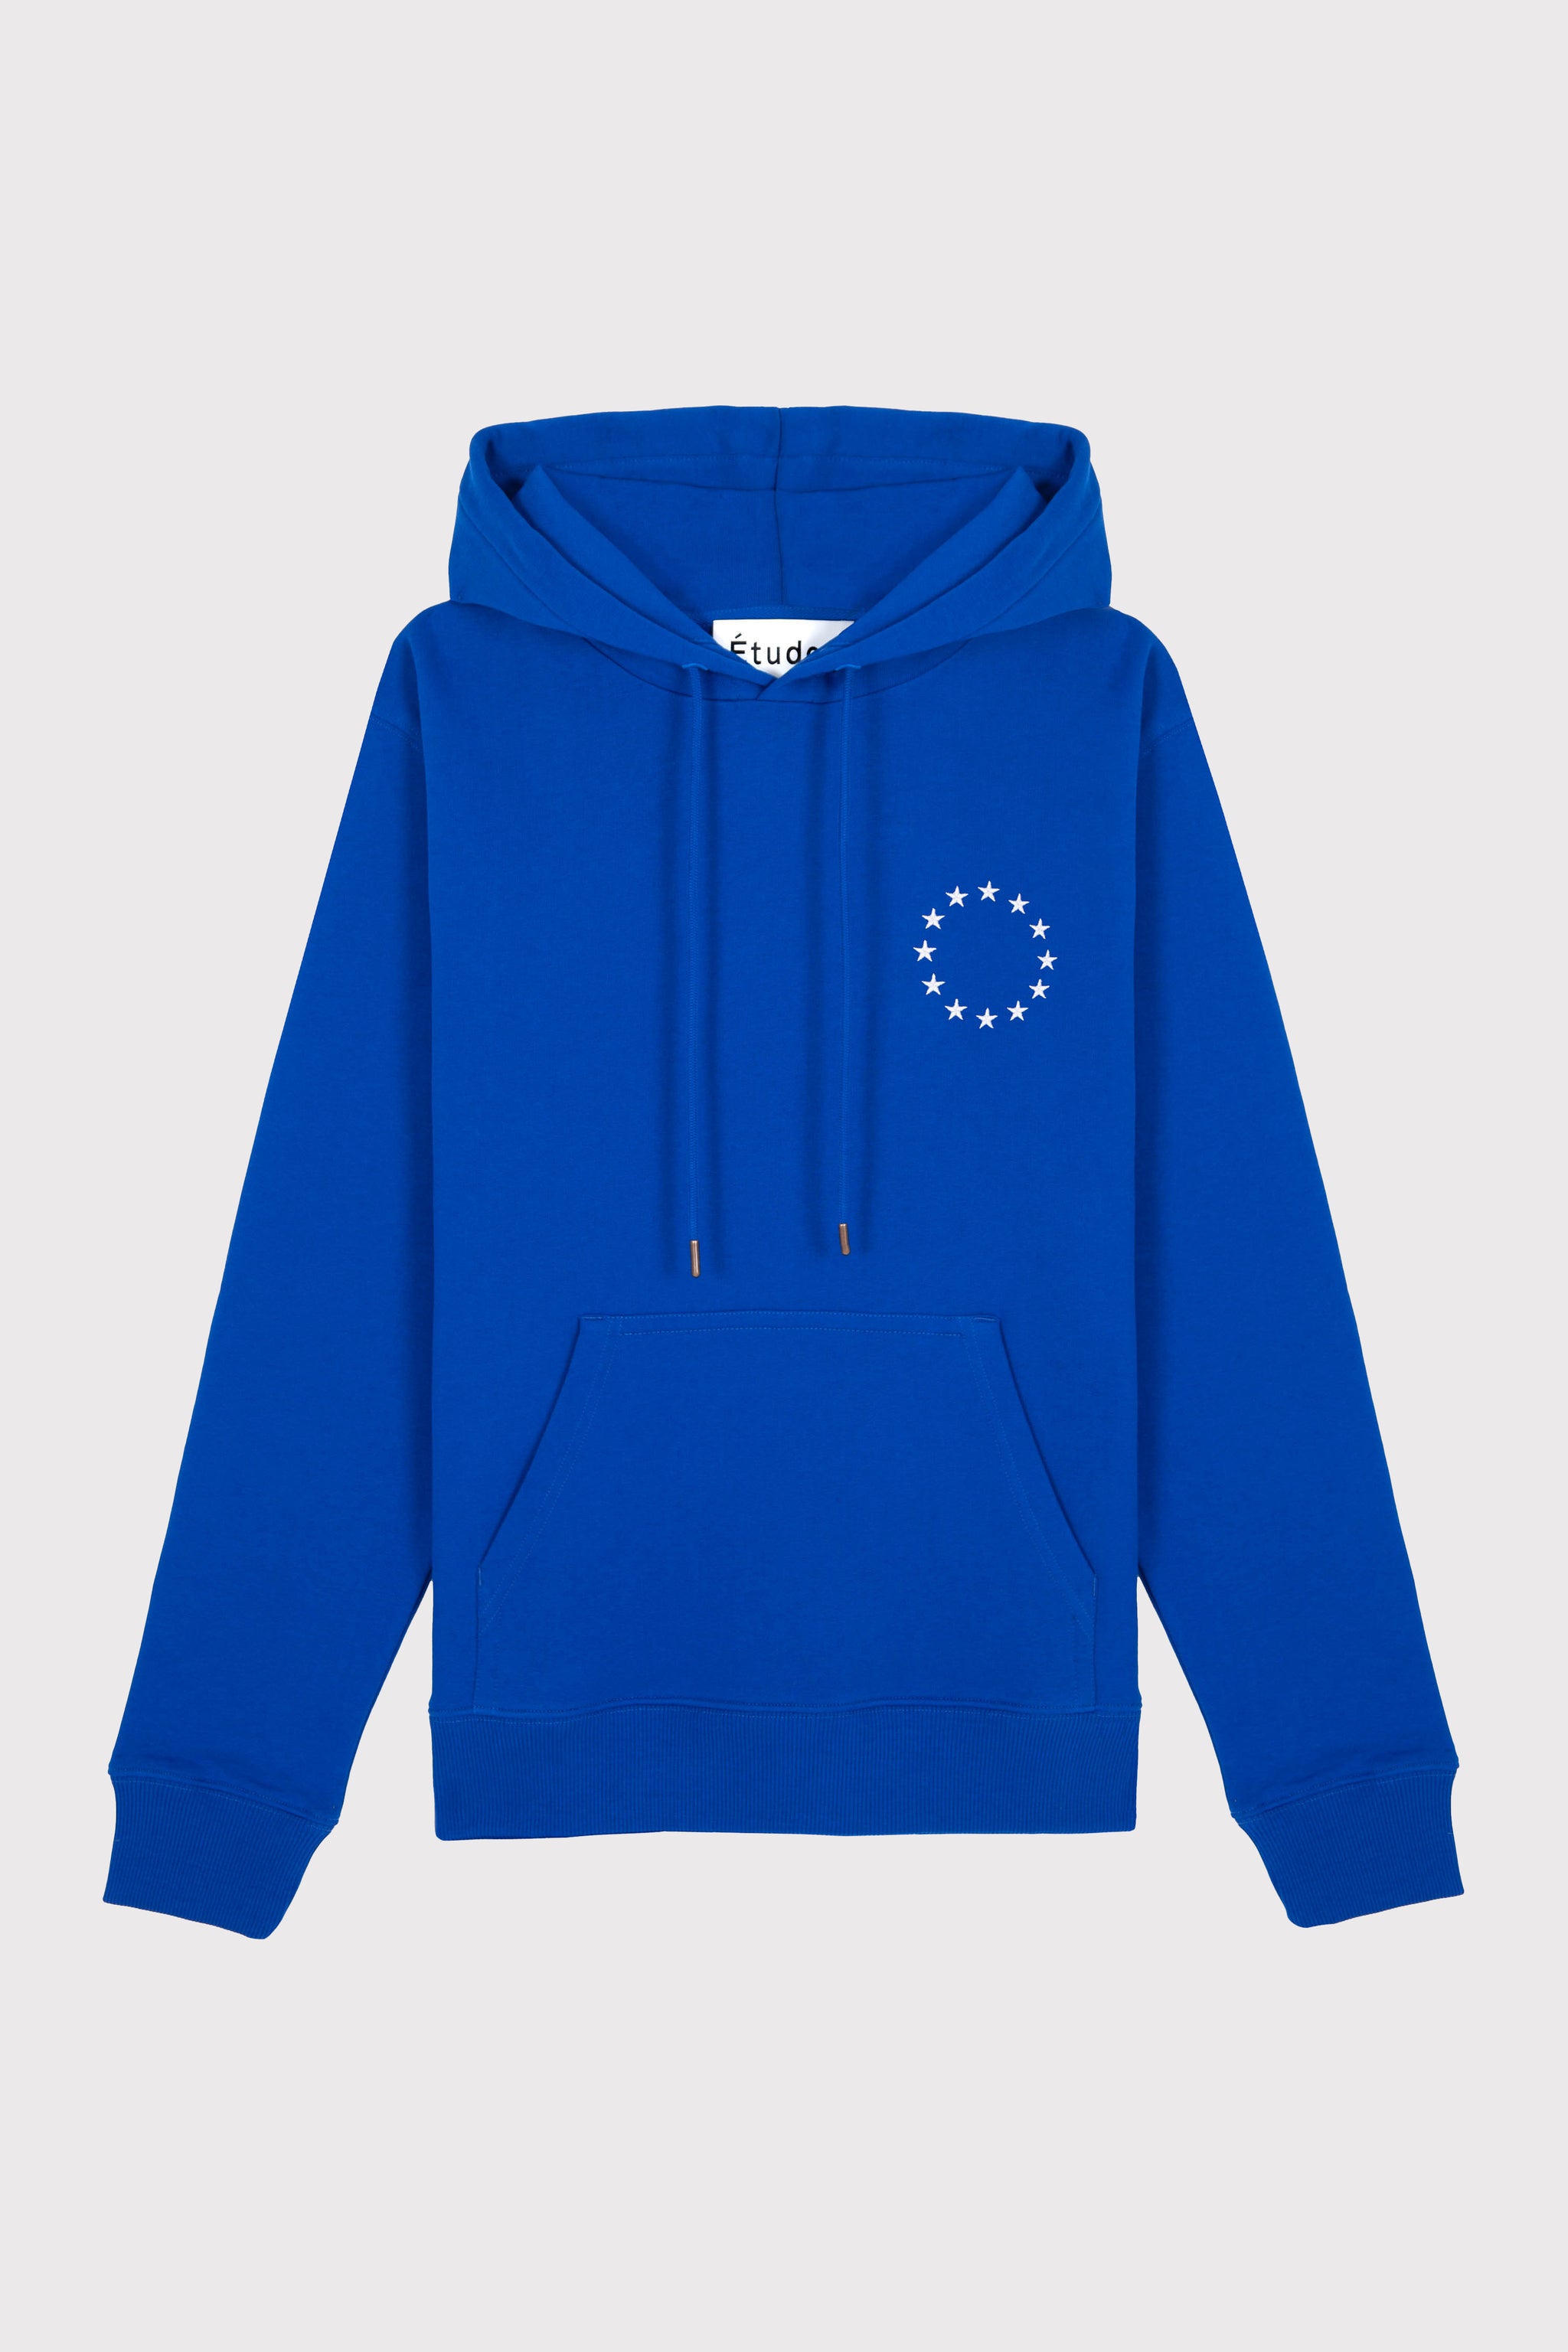 Études HOODIE EUROPA BLUE Sweatshirt 2